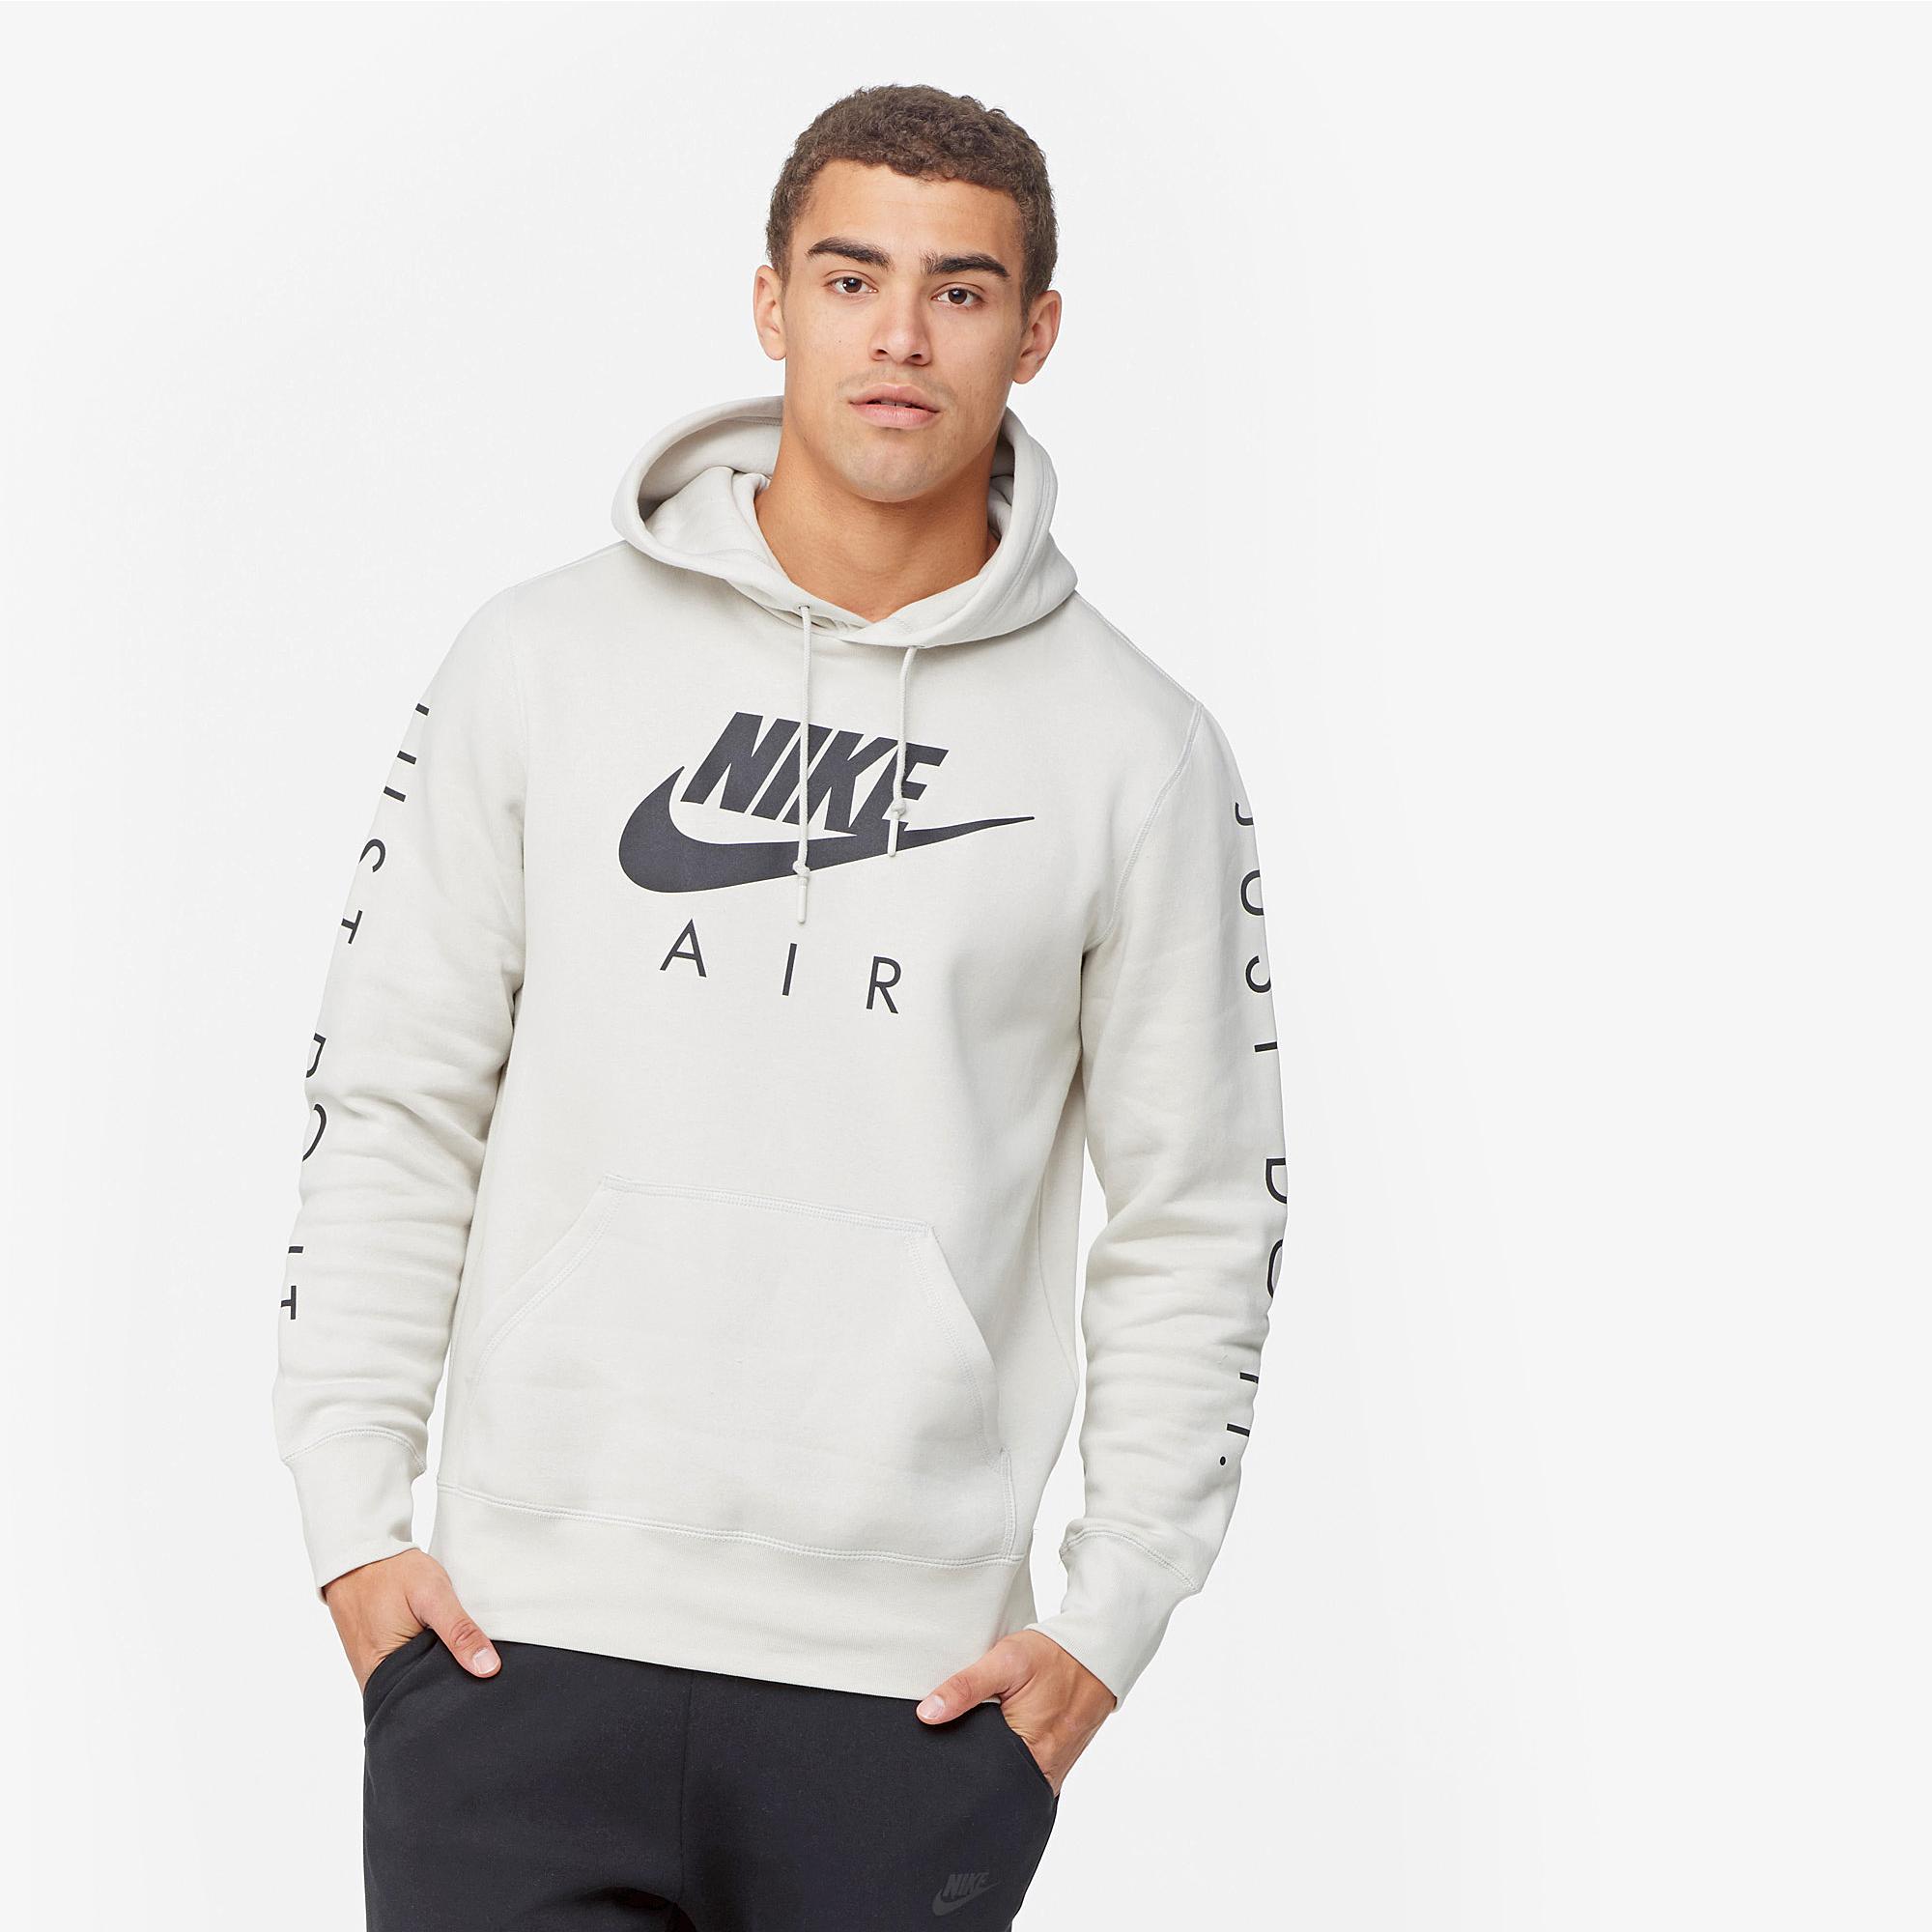 Nike Graphic Hoodie Sweatshirt in Gray for Men - Lyst